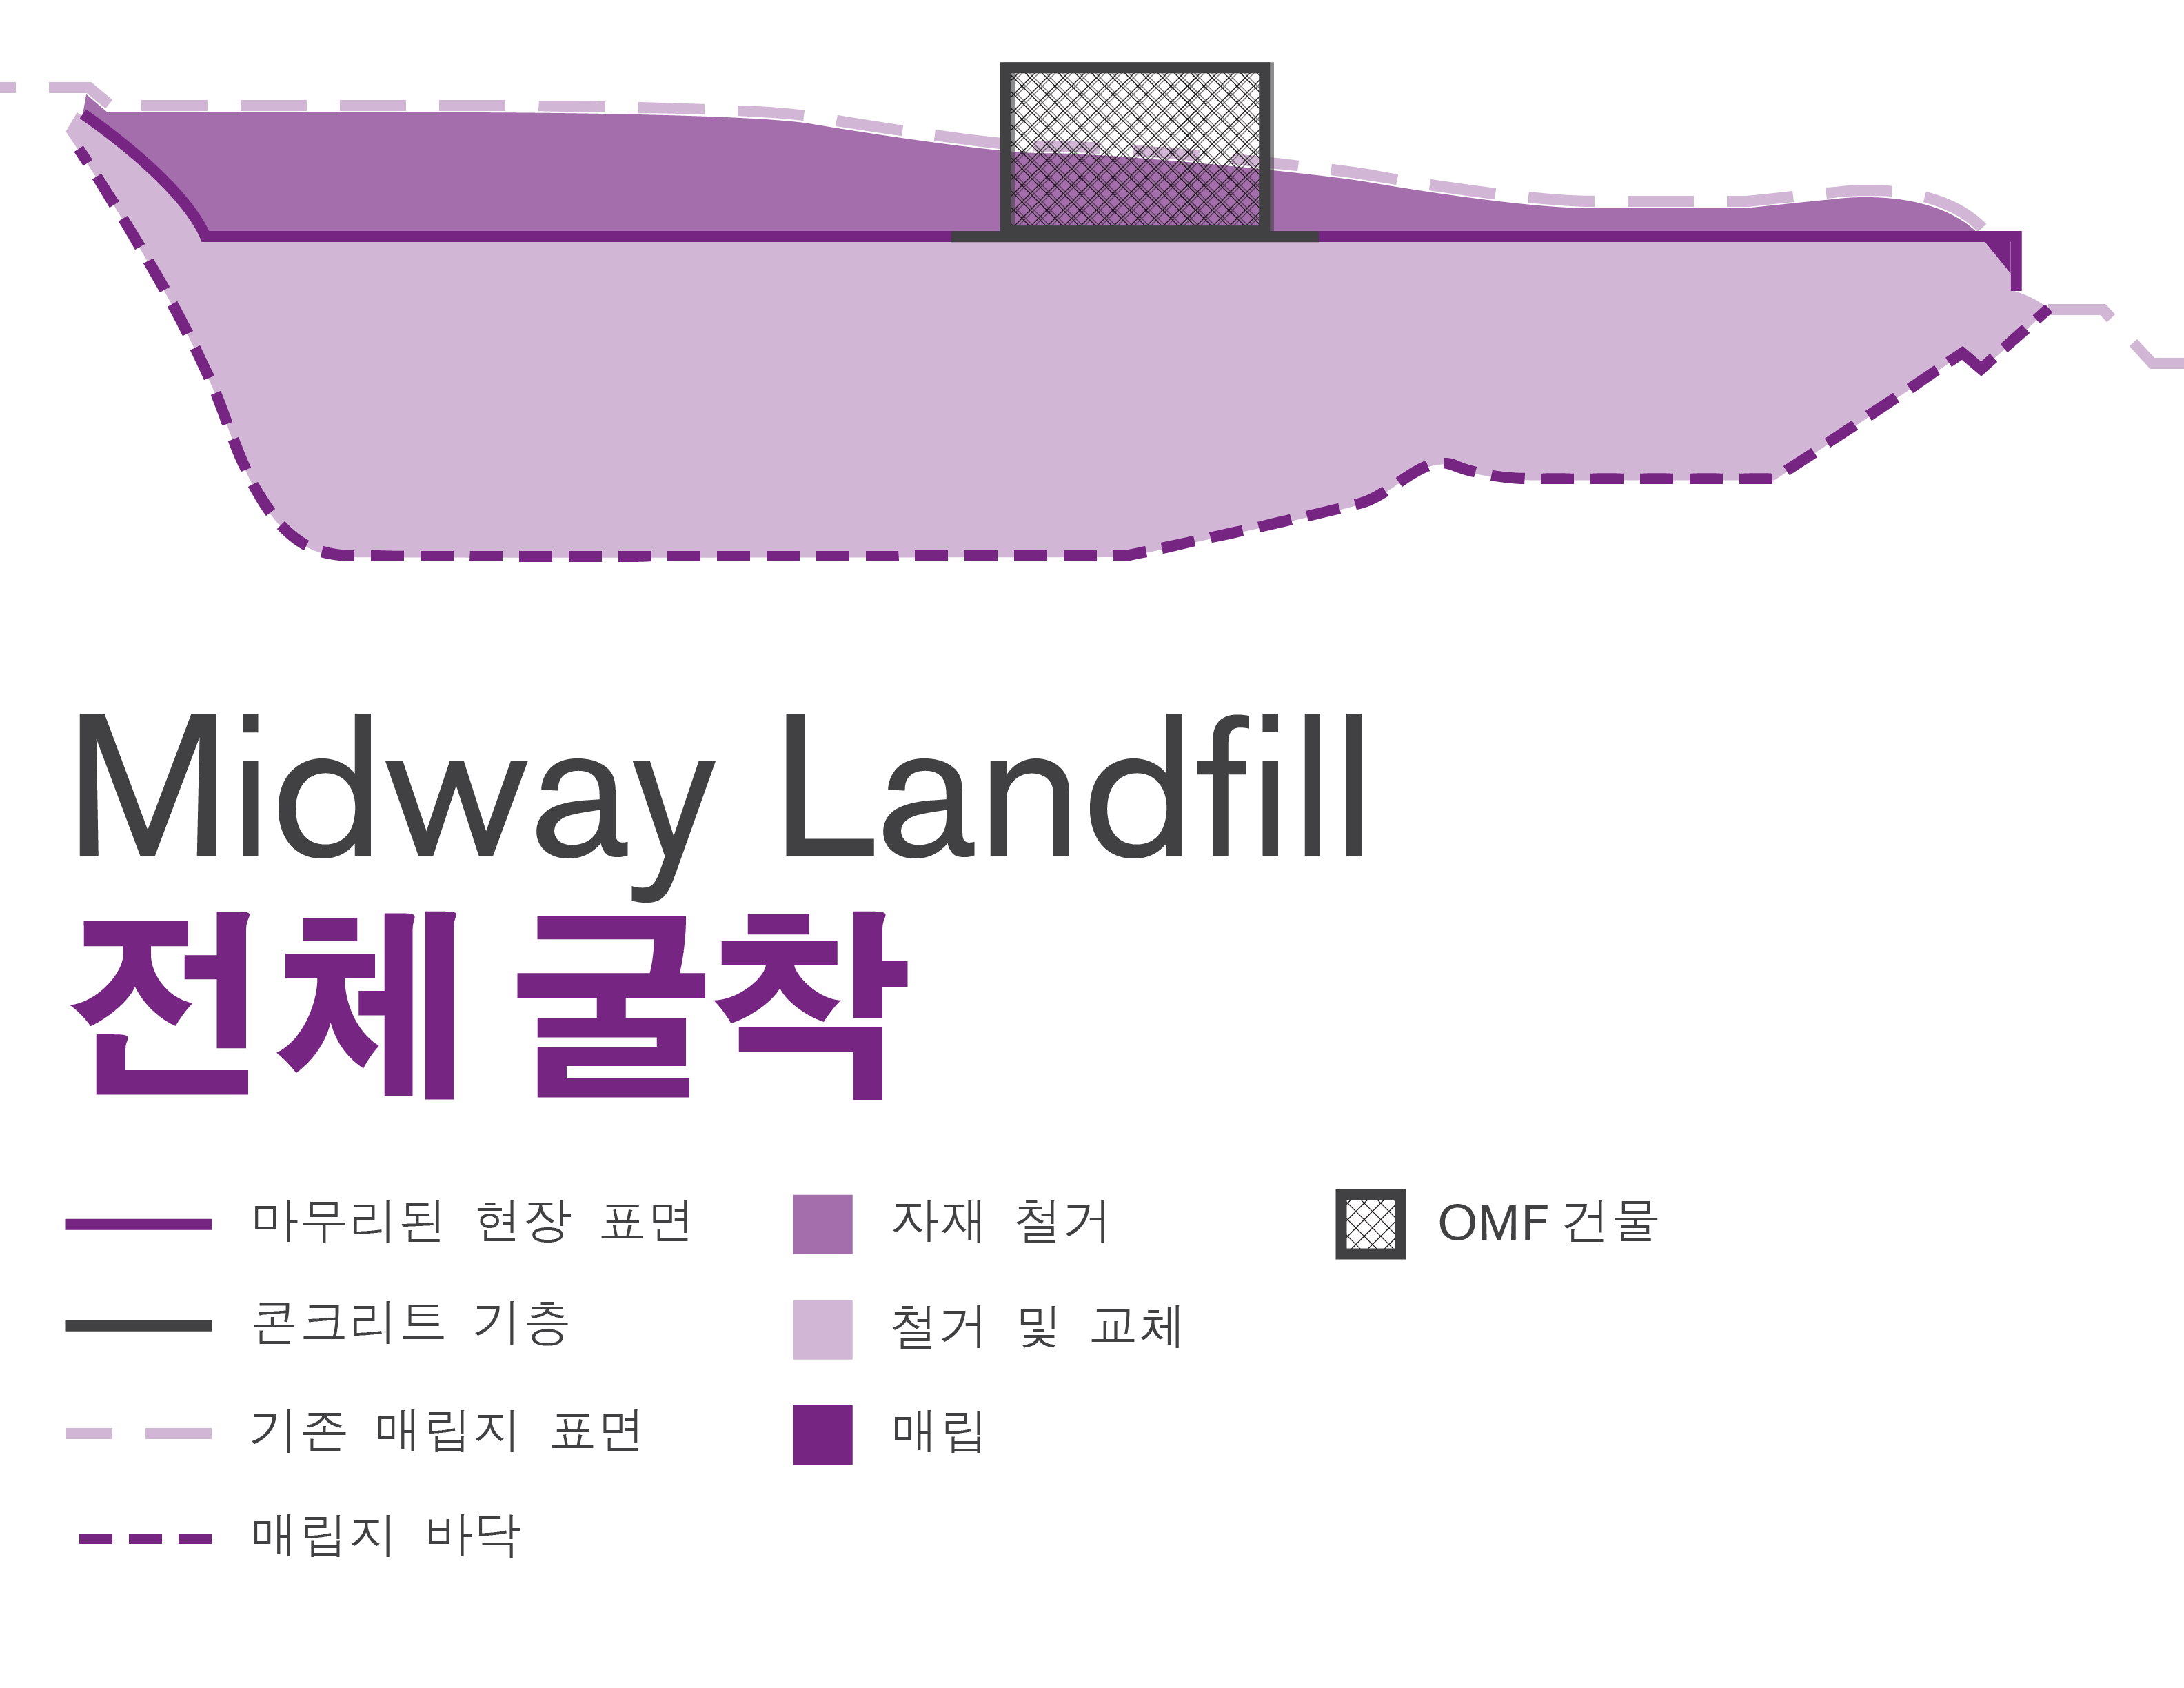 Midway Landfill 전체 굴착 옵션을 선택하면 Sound Transit은 유해 물질을 포함한 모든 매립 쓰레기를 완전히 굴착해야 합니다. 그 후, 인부는 매립지의 바닥과 향후 남부 OMF 현장 사면 사이의 공간을 다시 메우게 됩니다.